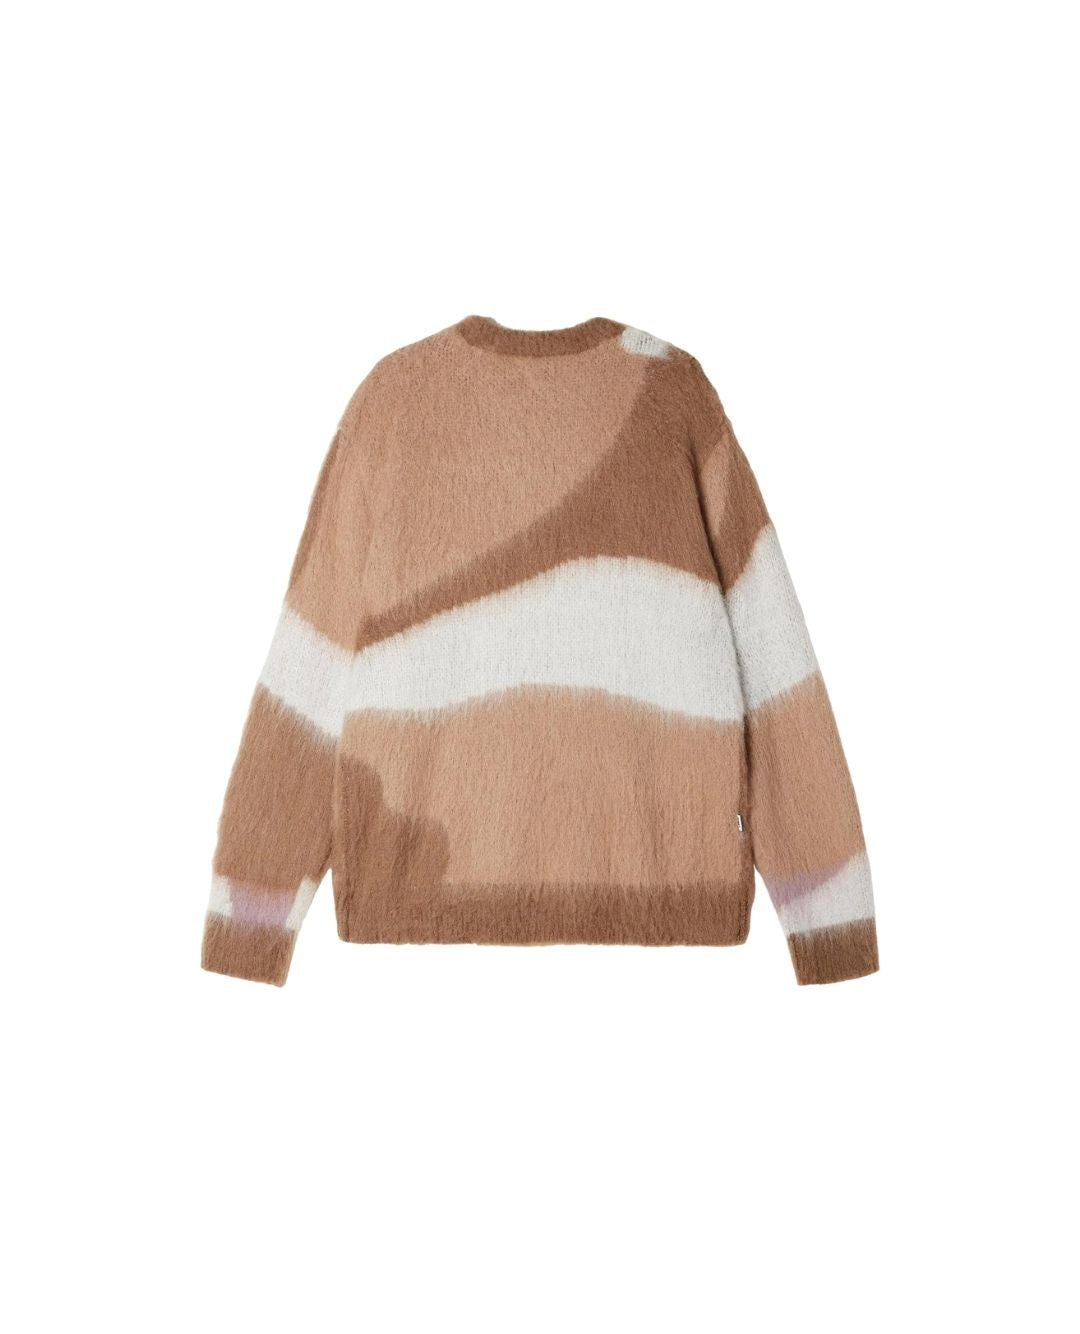 Idlewood Sweater